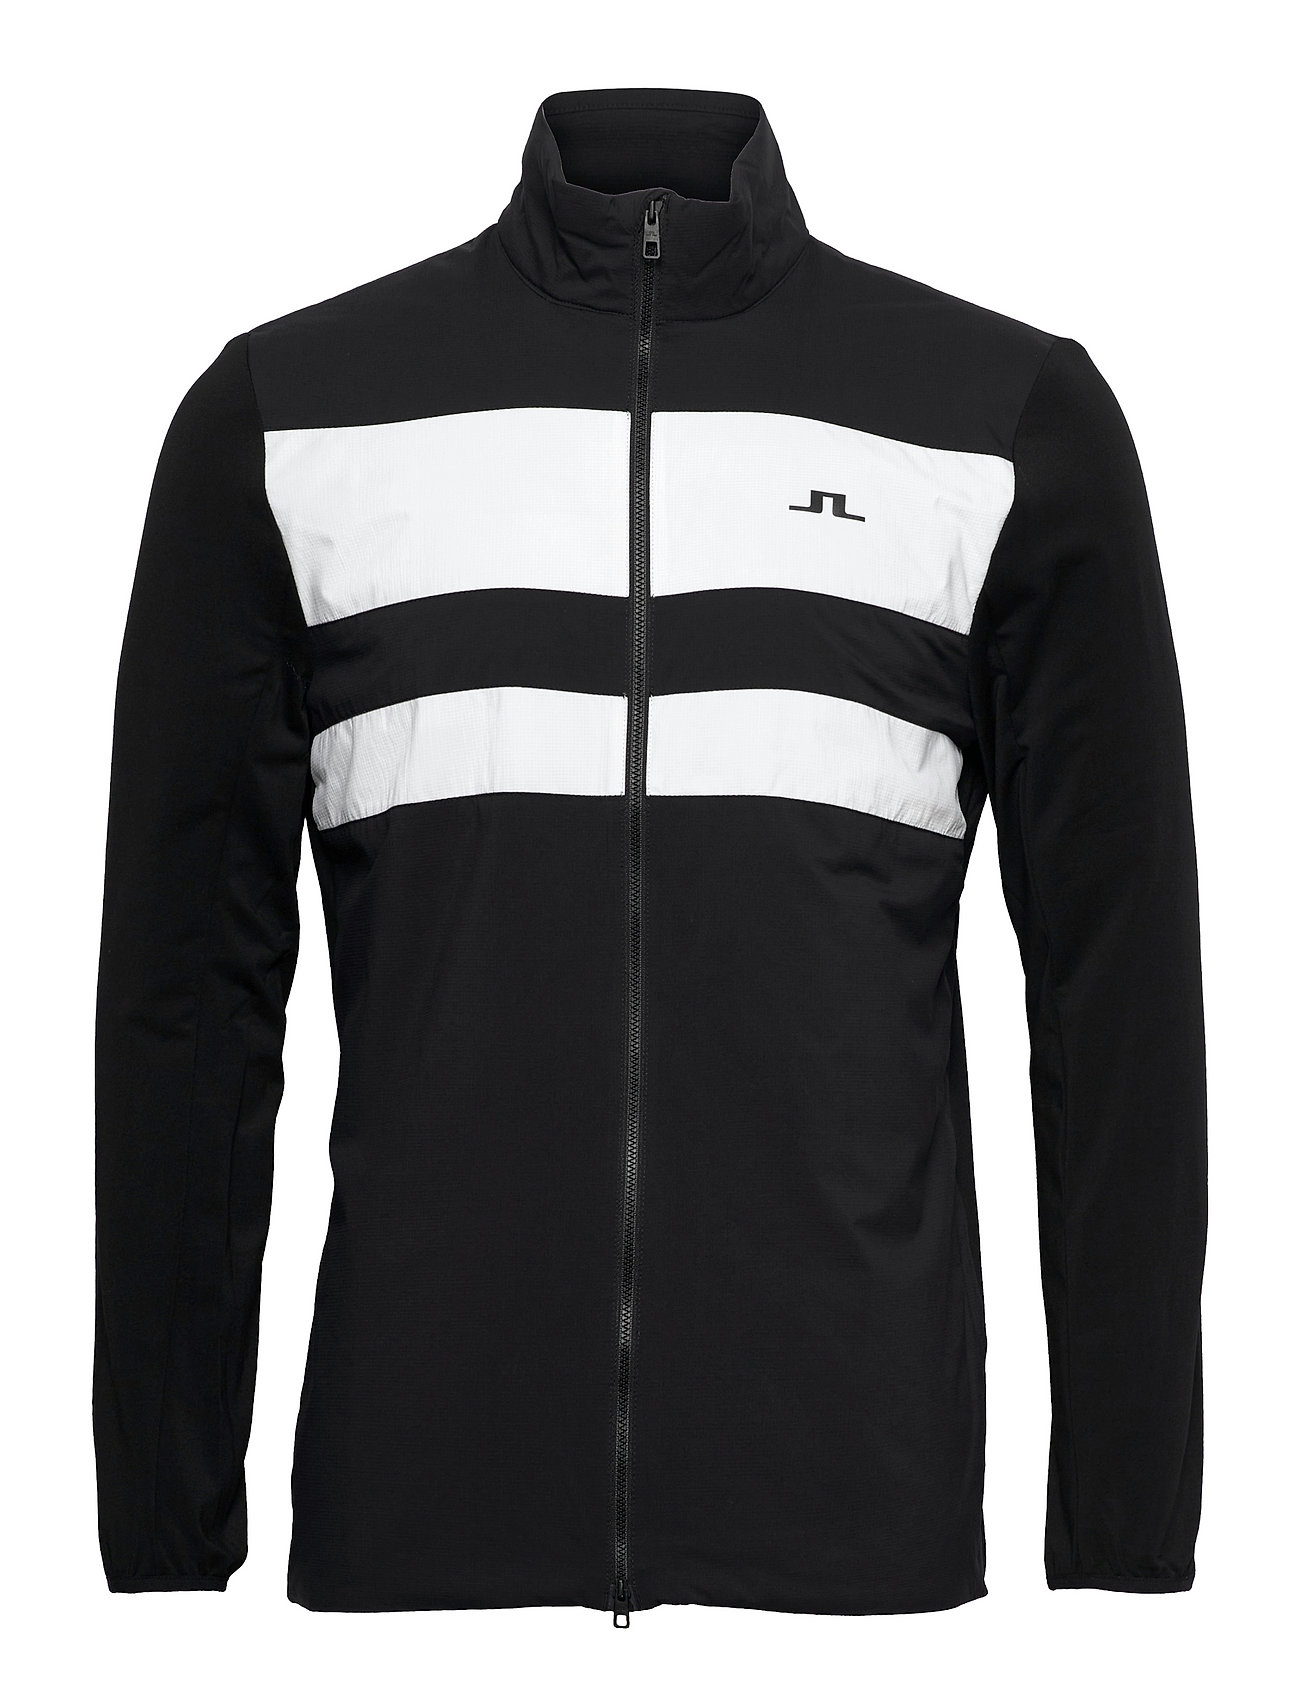 Packlight Hybrid Golf Jacket Outerwear Sport Jackets Musta J. Lindeberg Golf